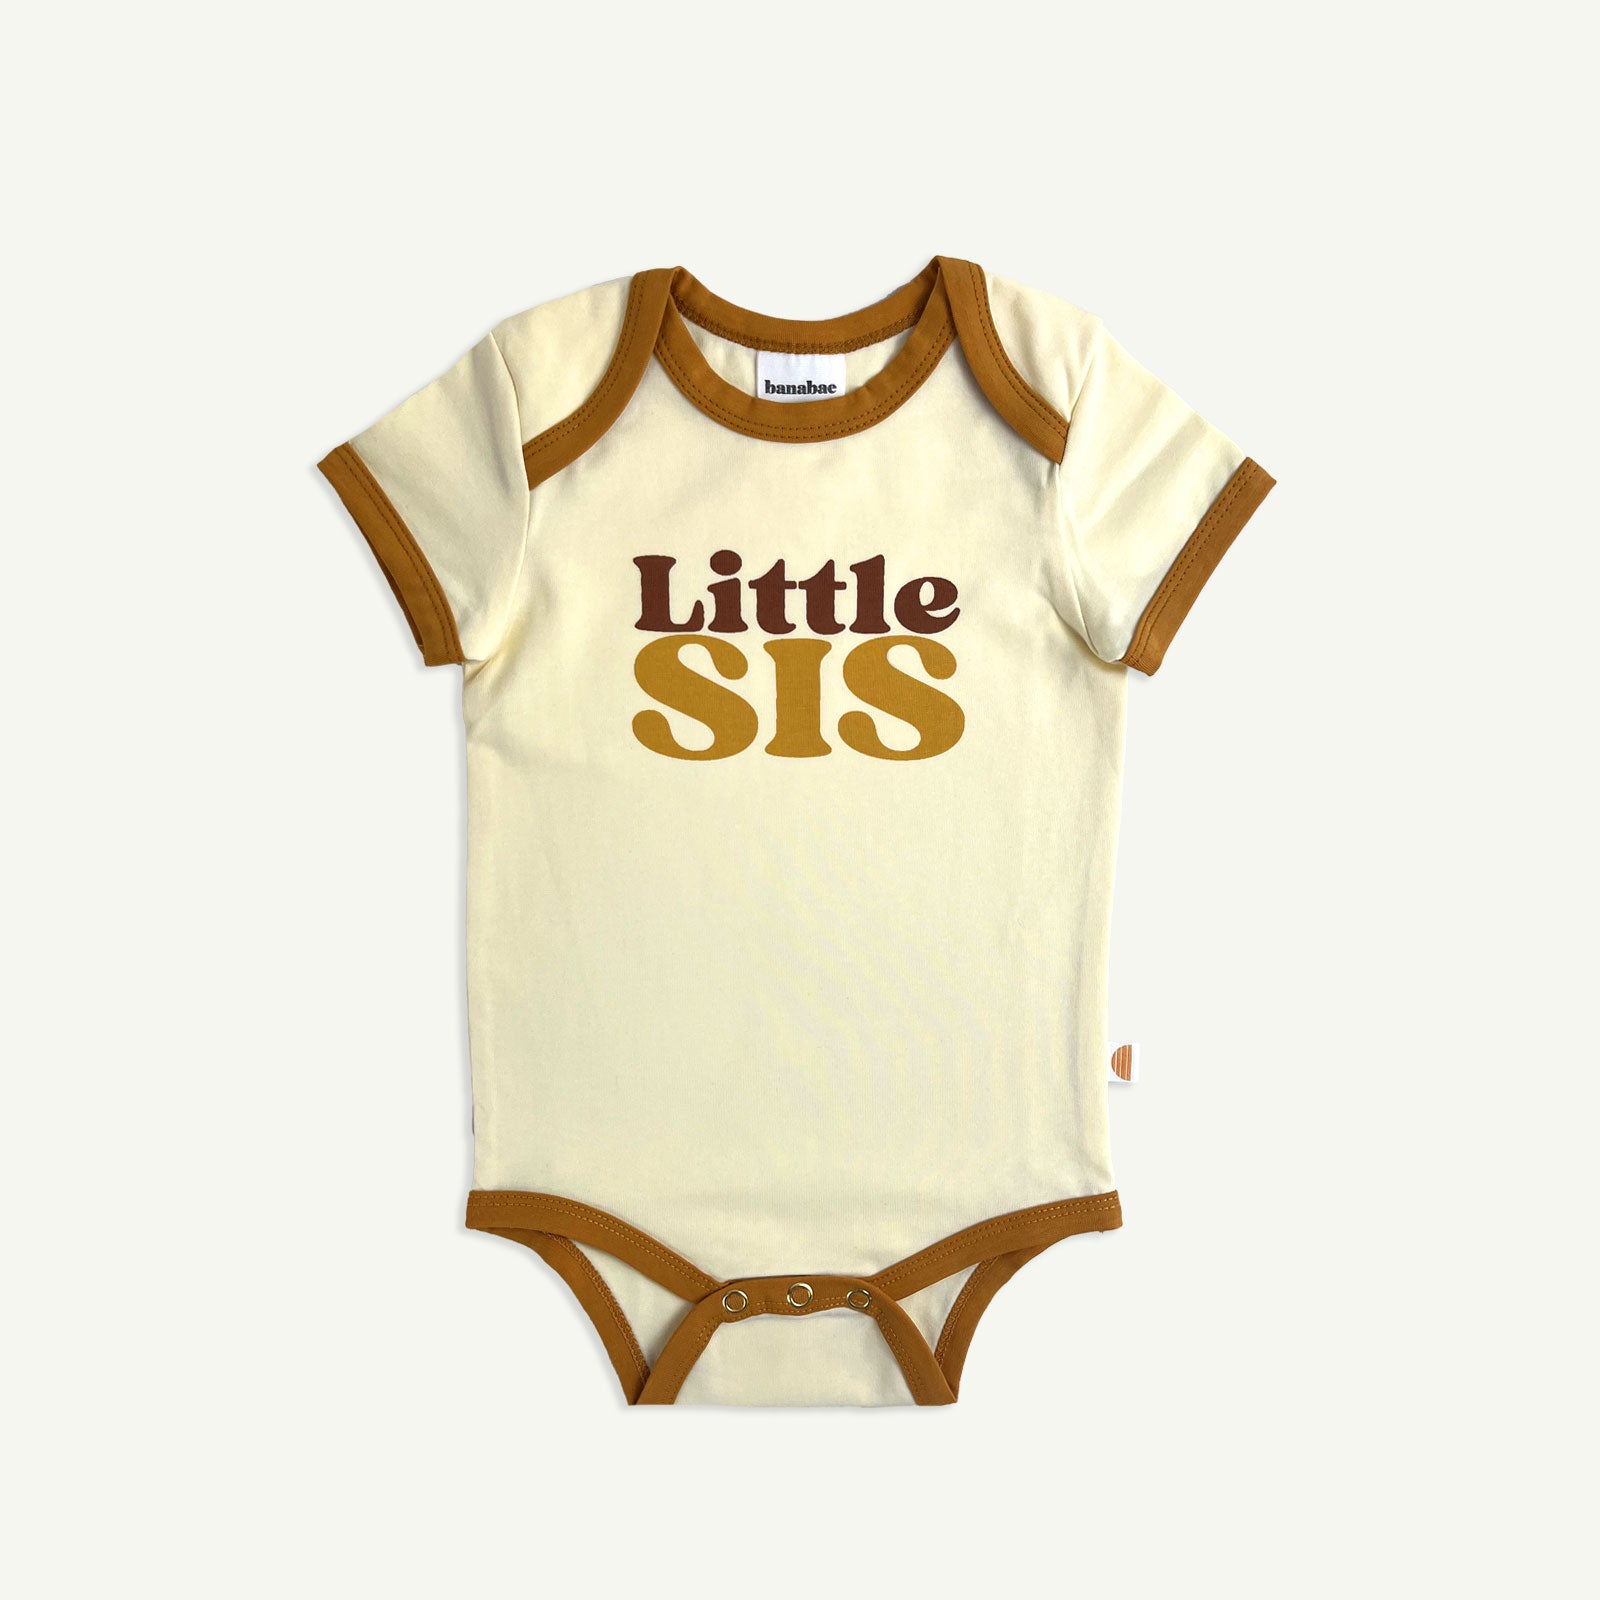 Little Sis Organic Cotton Onesie - Mustard